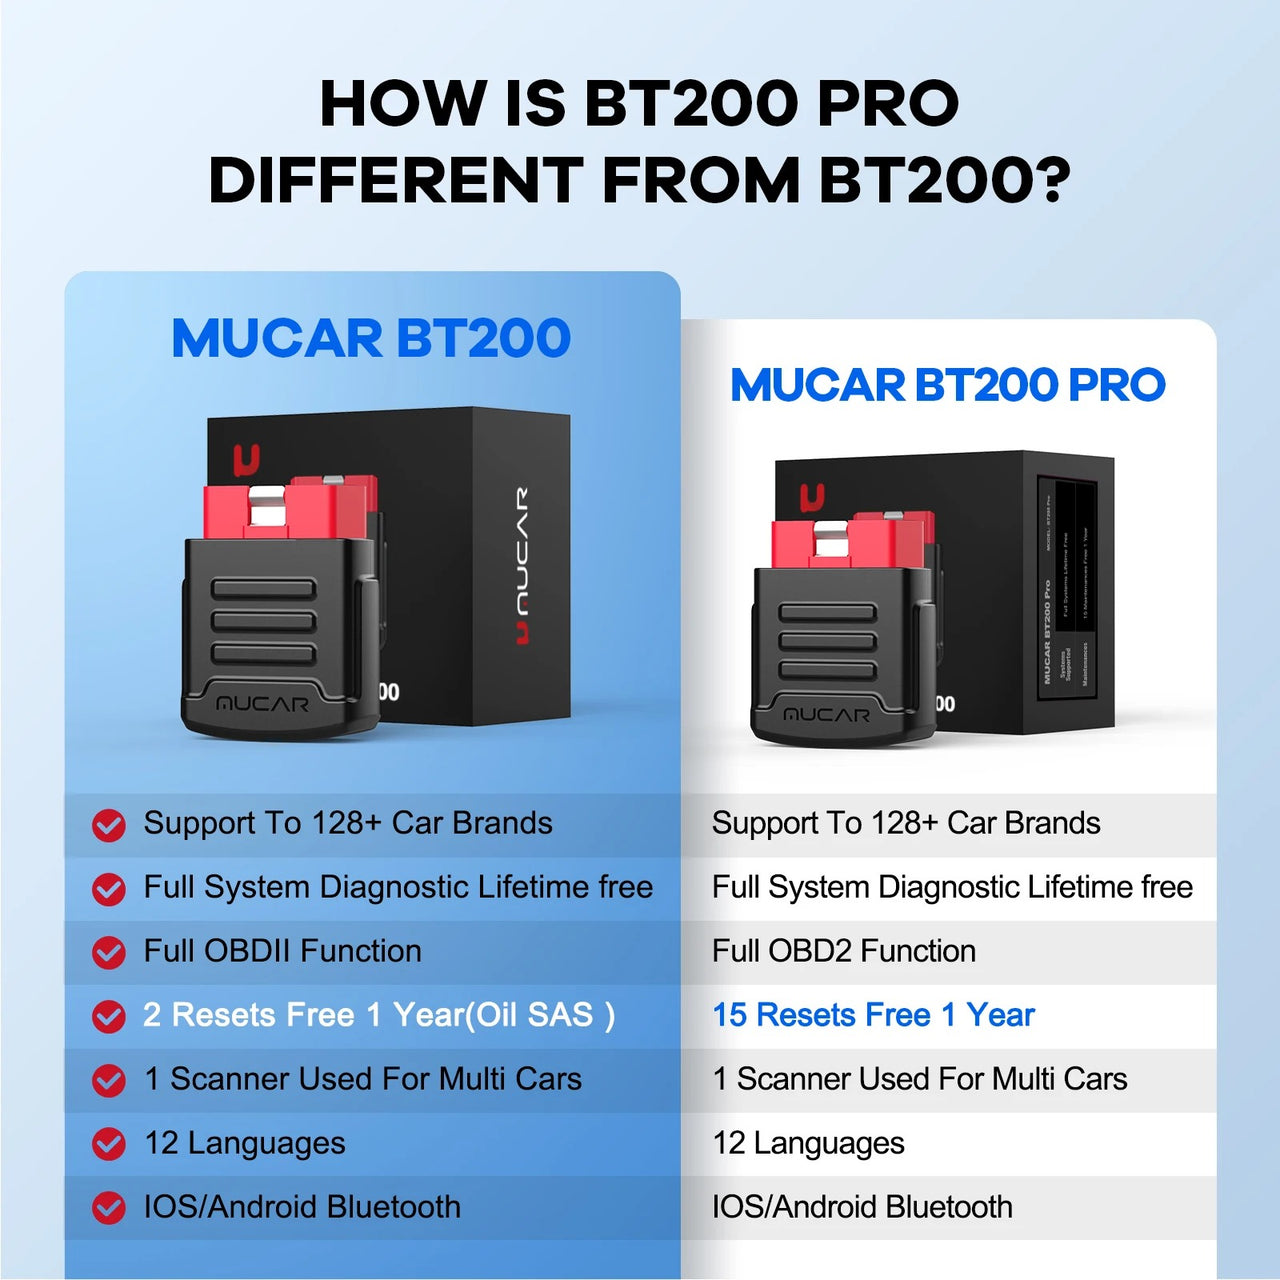 MUCAR BT200/BT200 Pro - Bluetooth OBD Scanner